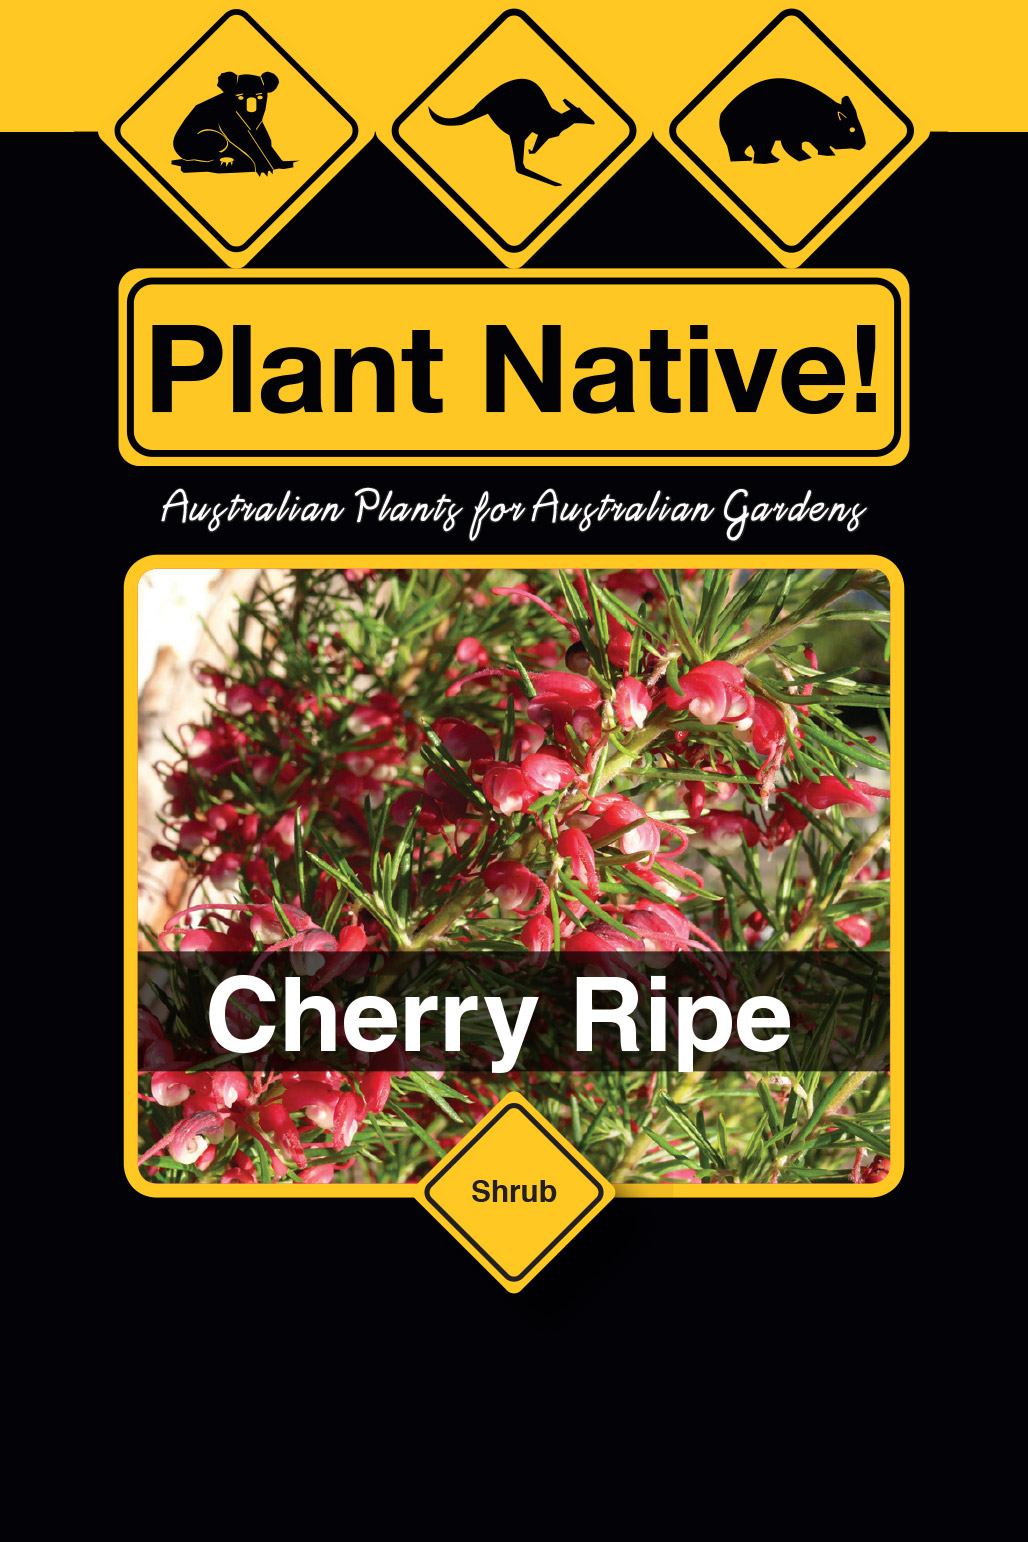 Cherry Ripe - Plant Native!